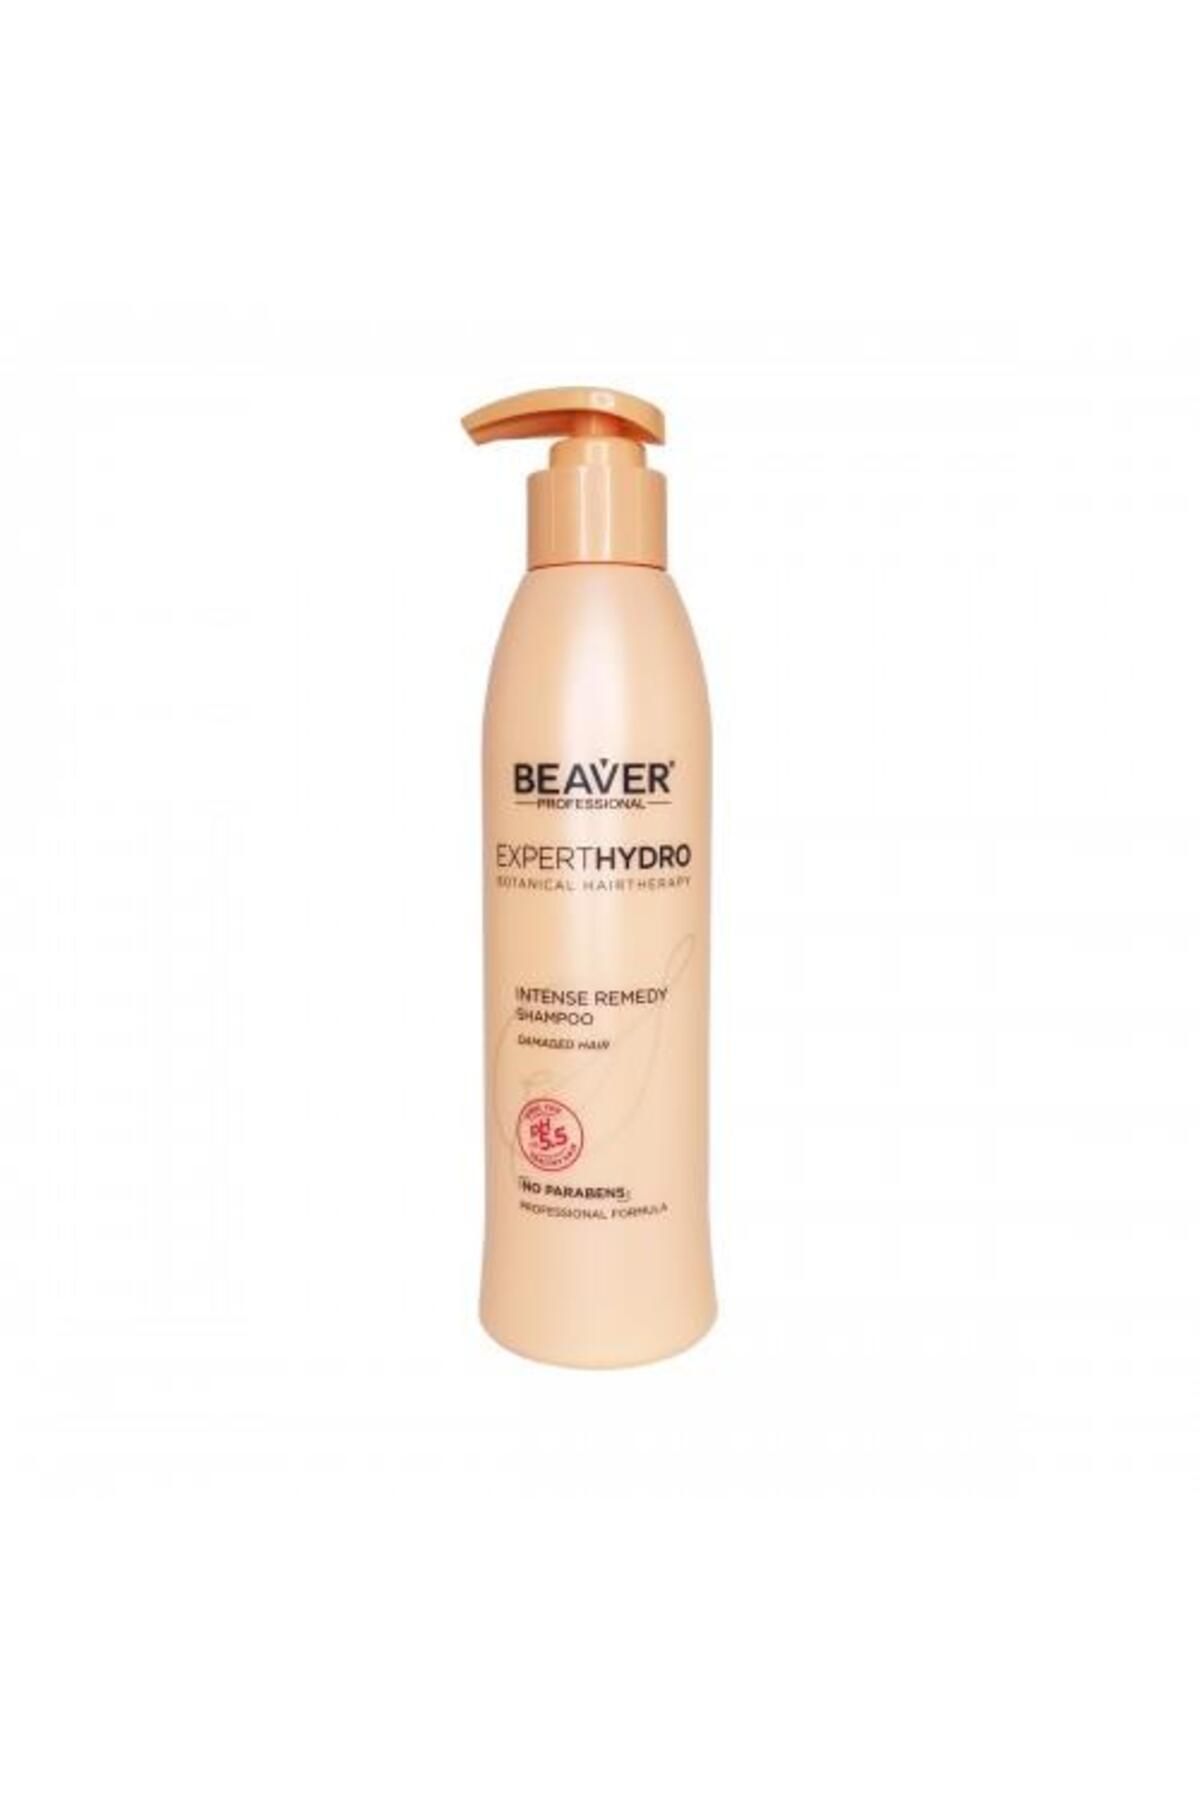 Beaver Intense Remedy Shampoo 318 ml 811131030343